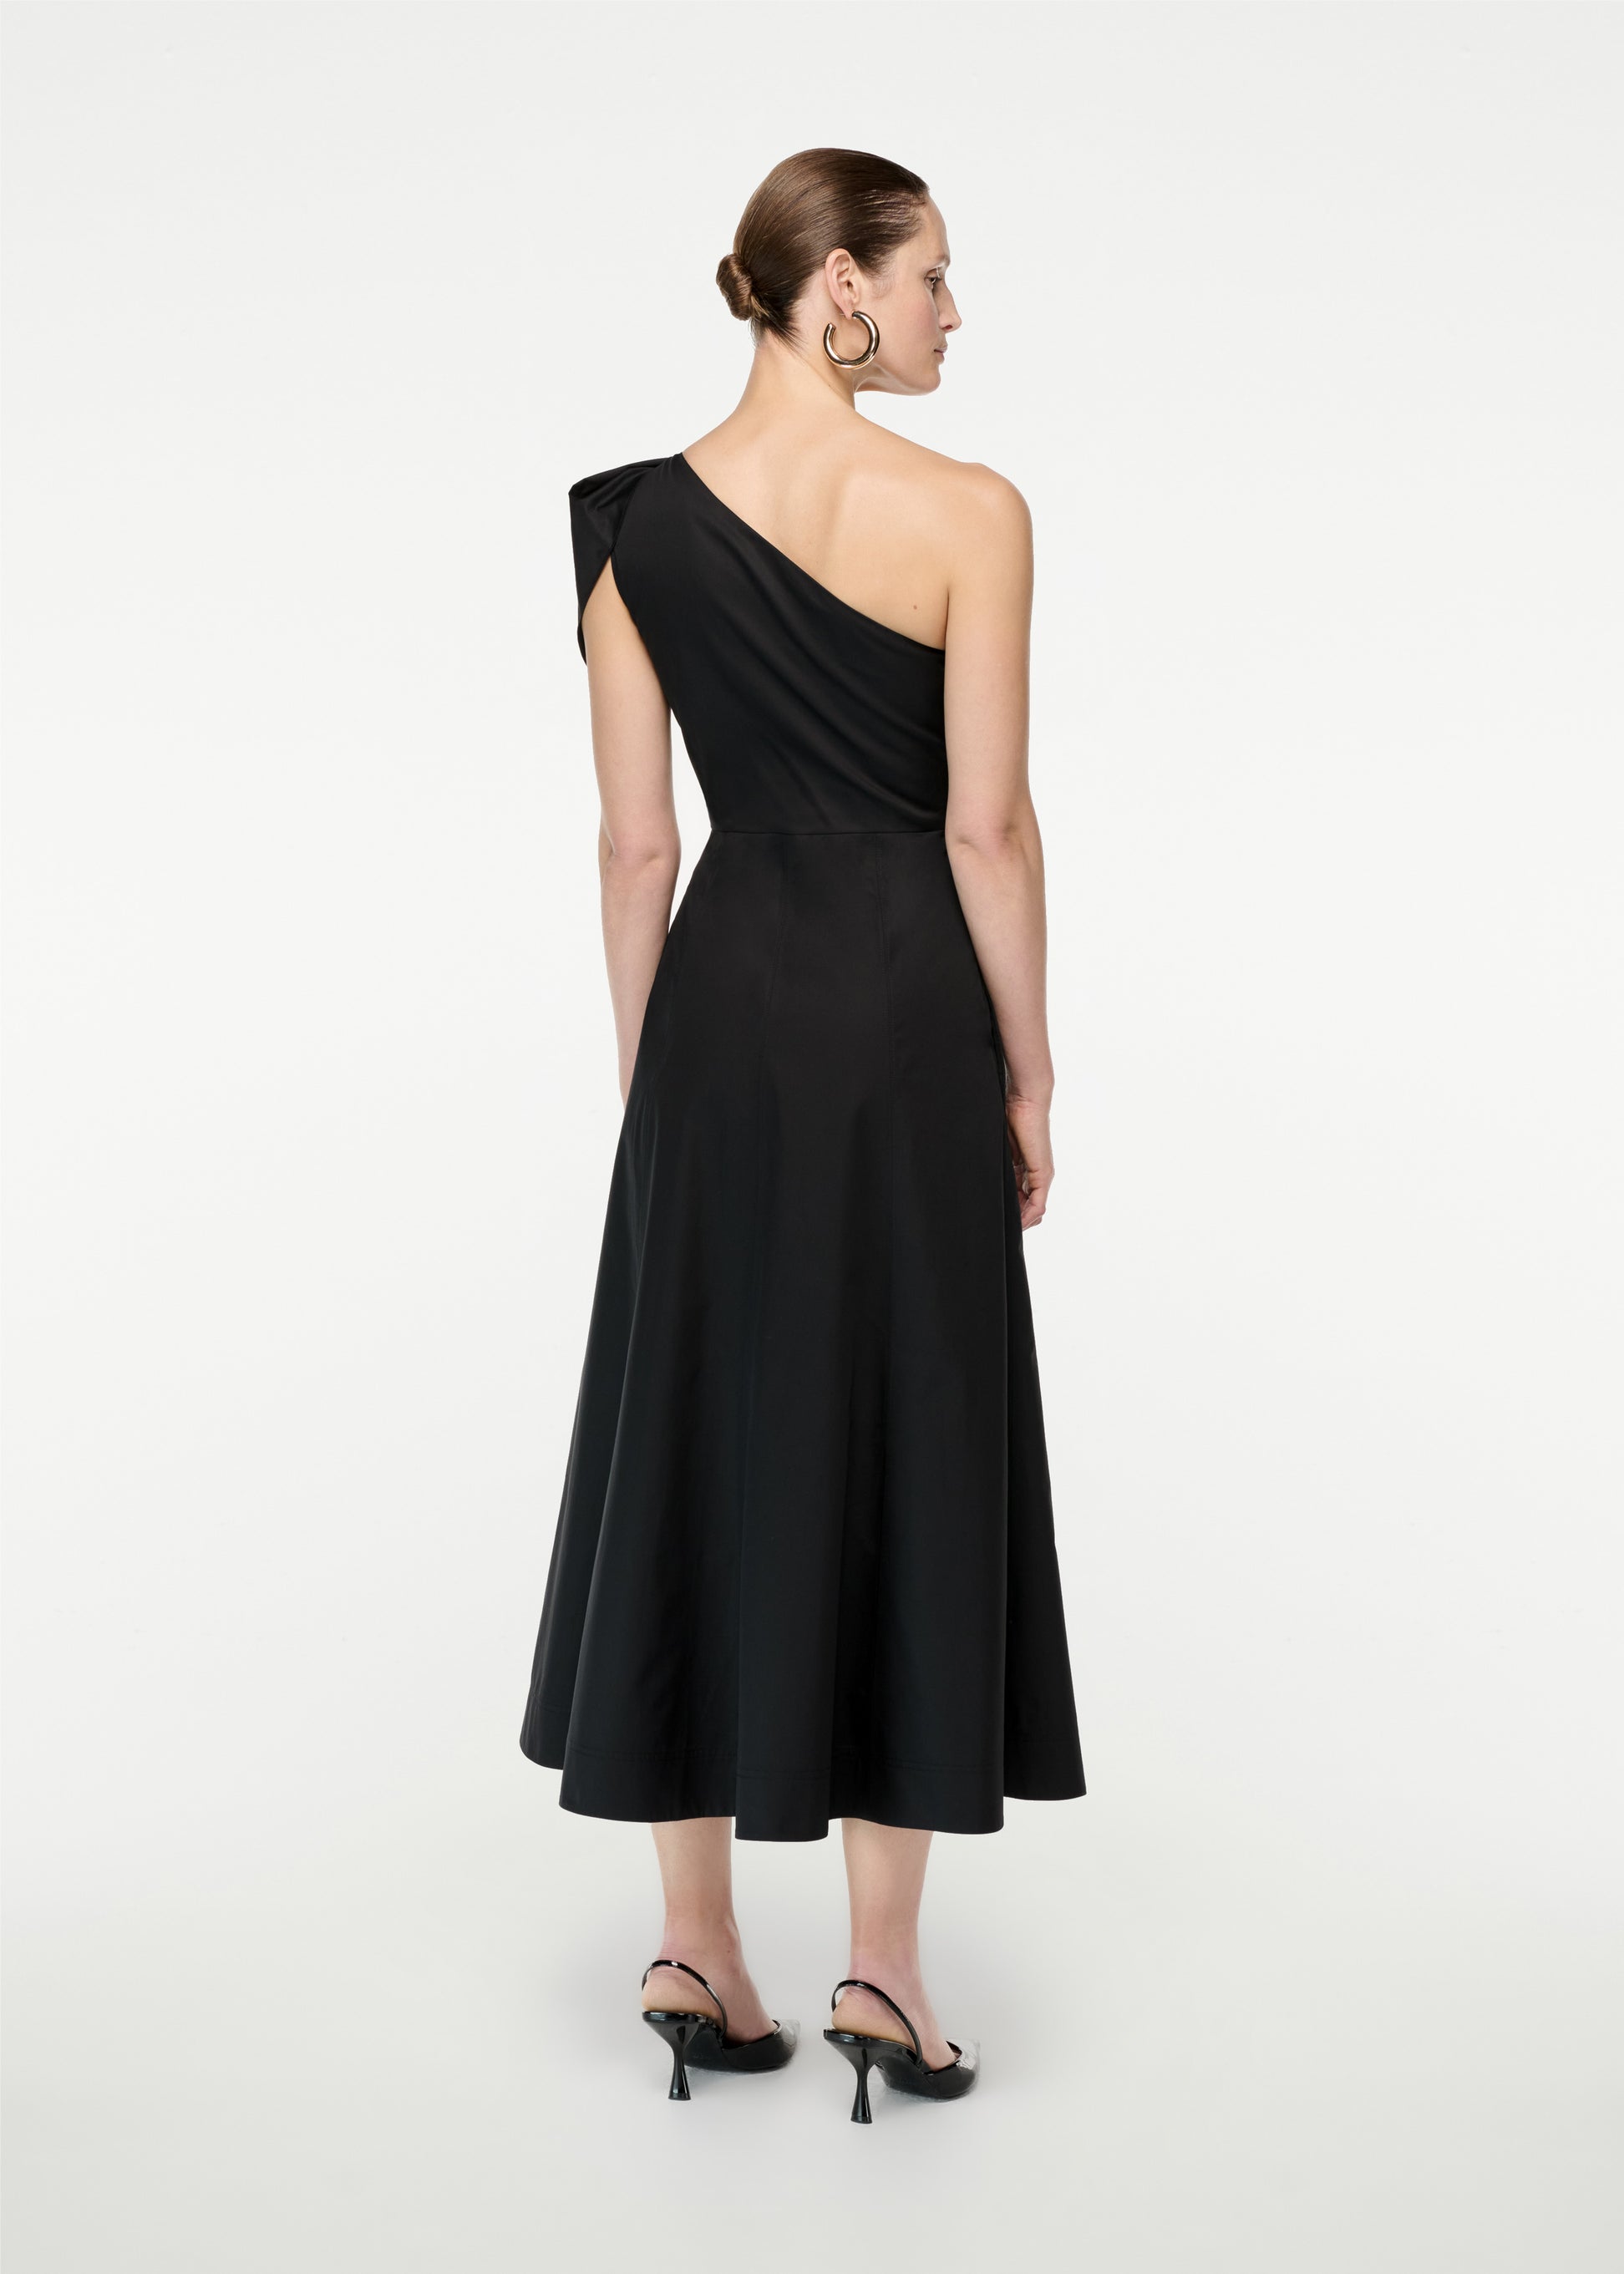 The back of a woman wearing the Asymmetric Cotton Poplin Midi Dress in Black